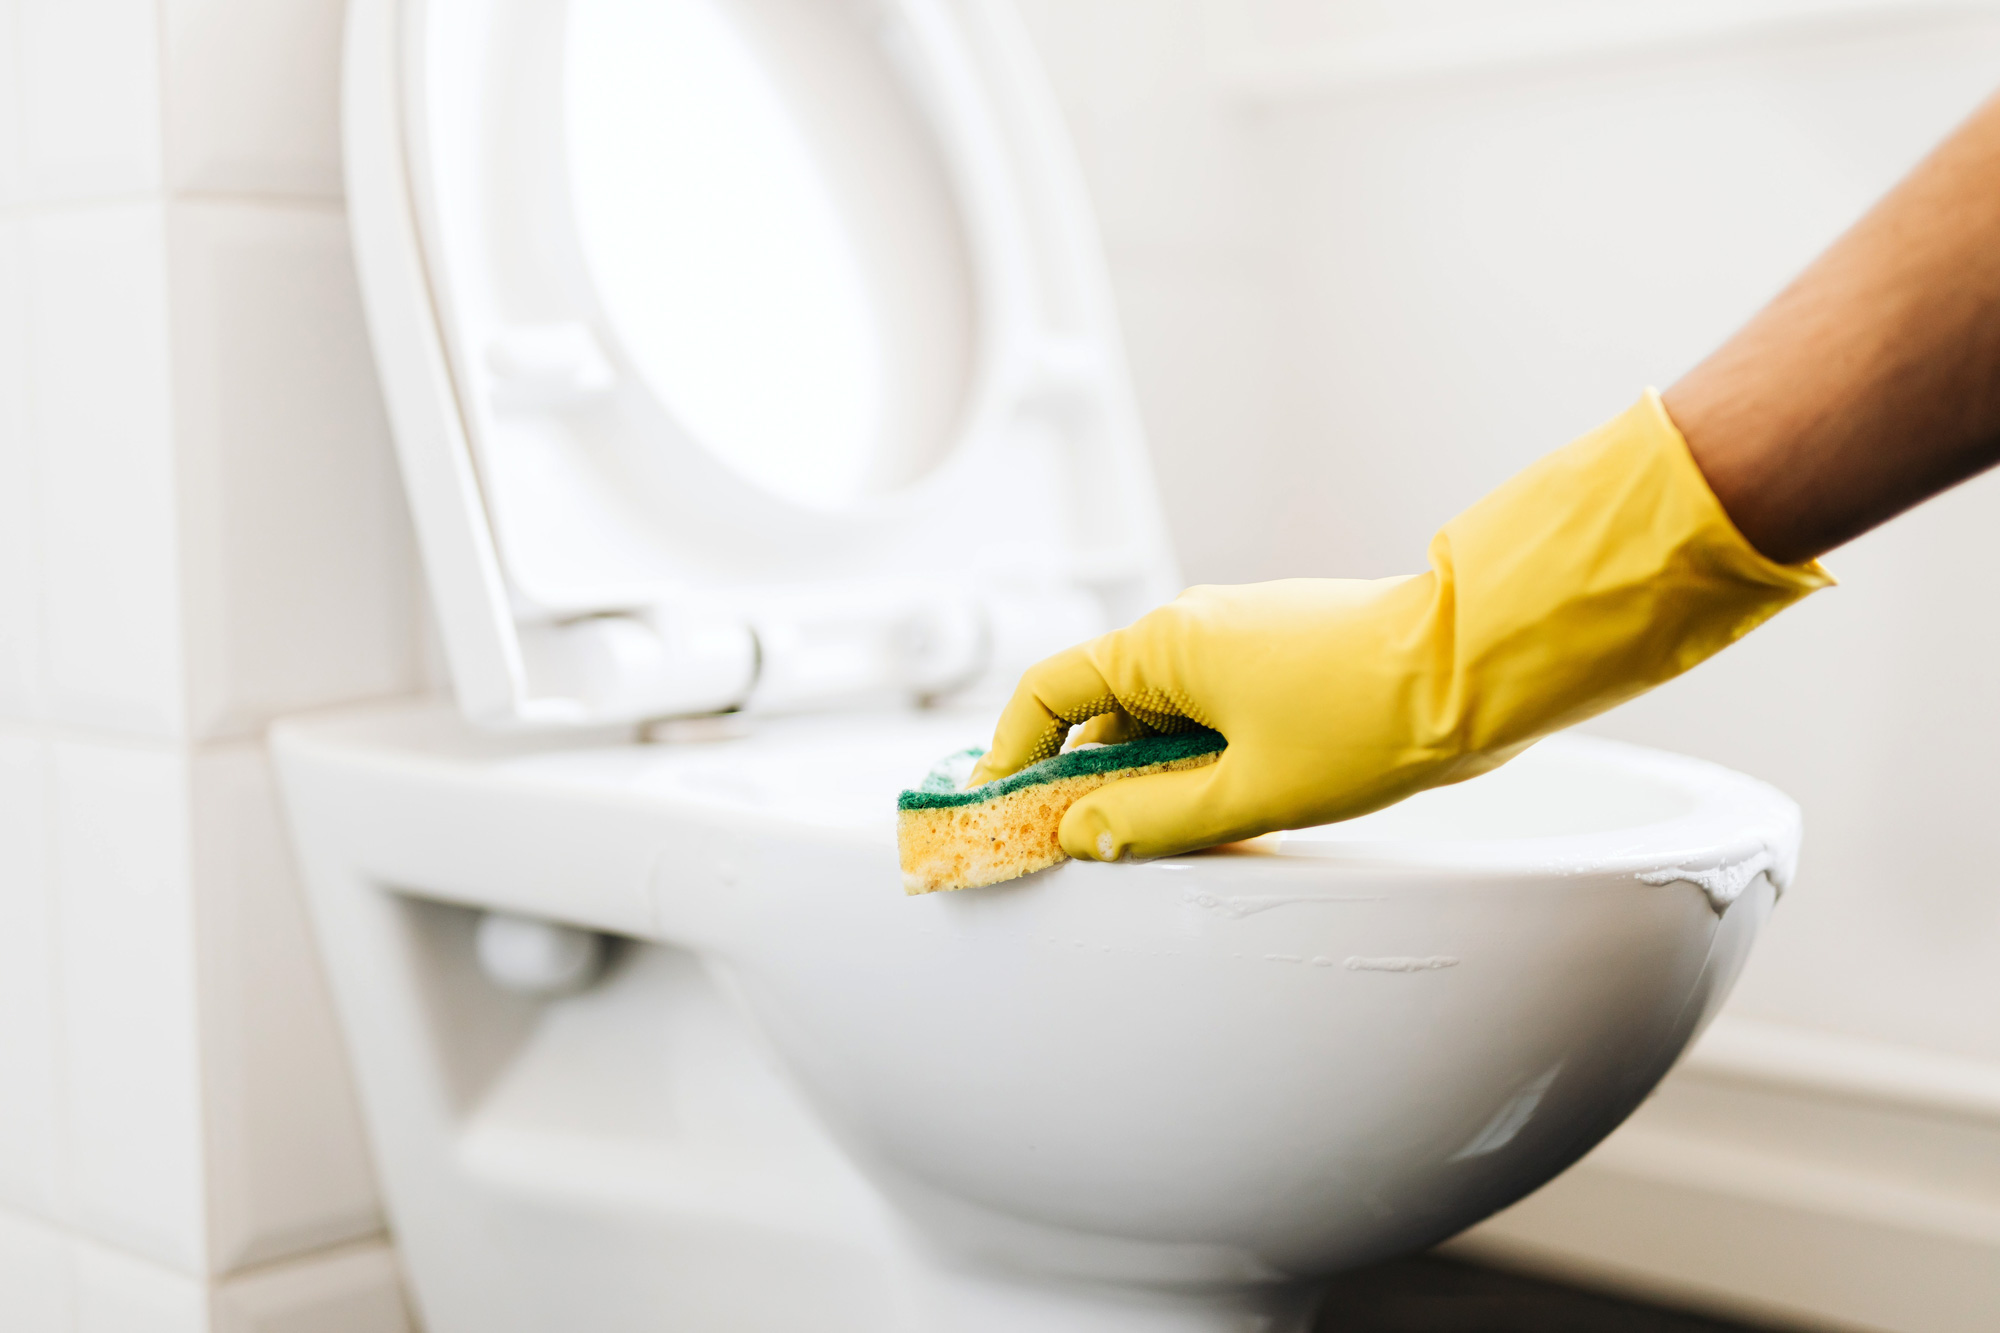 Scrubbing bathroom with cleaning gloves. Photography by Karolina Grabowska @Pexels.